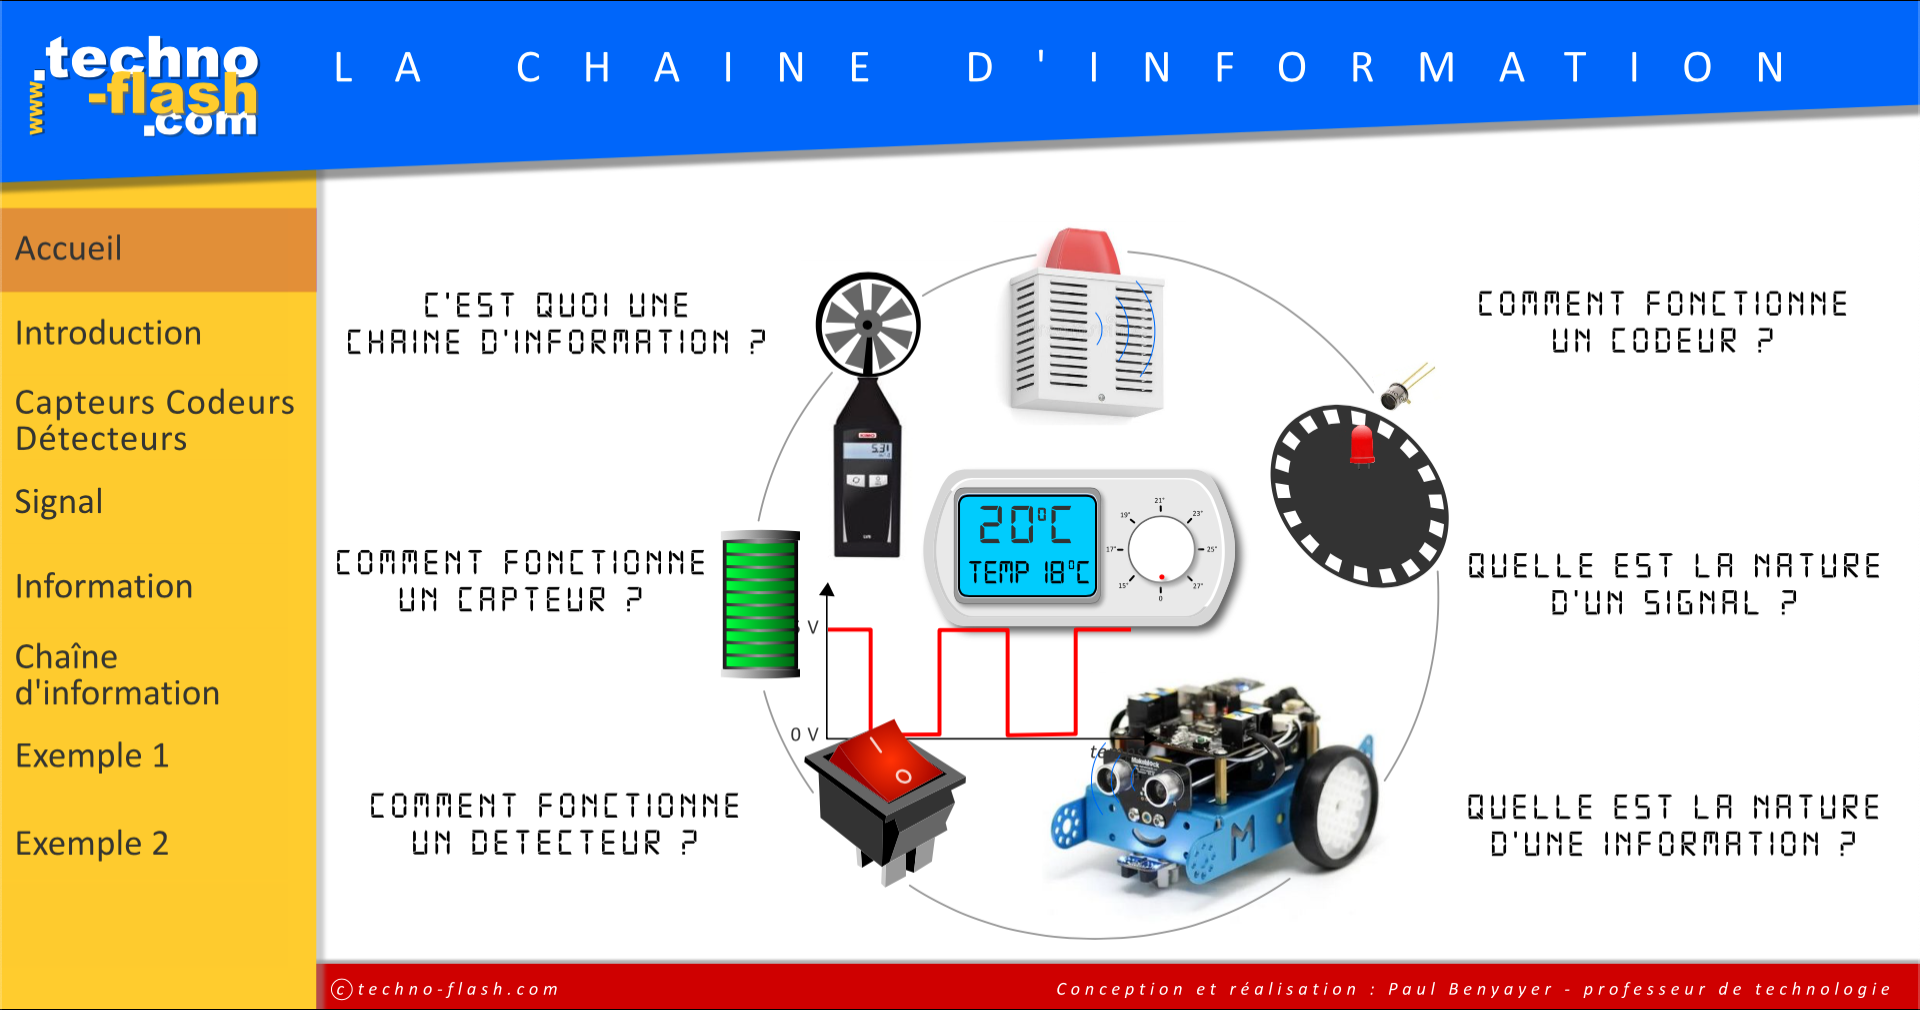 chaine_information_technoflash.png